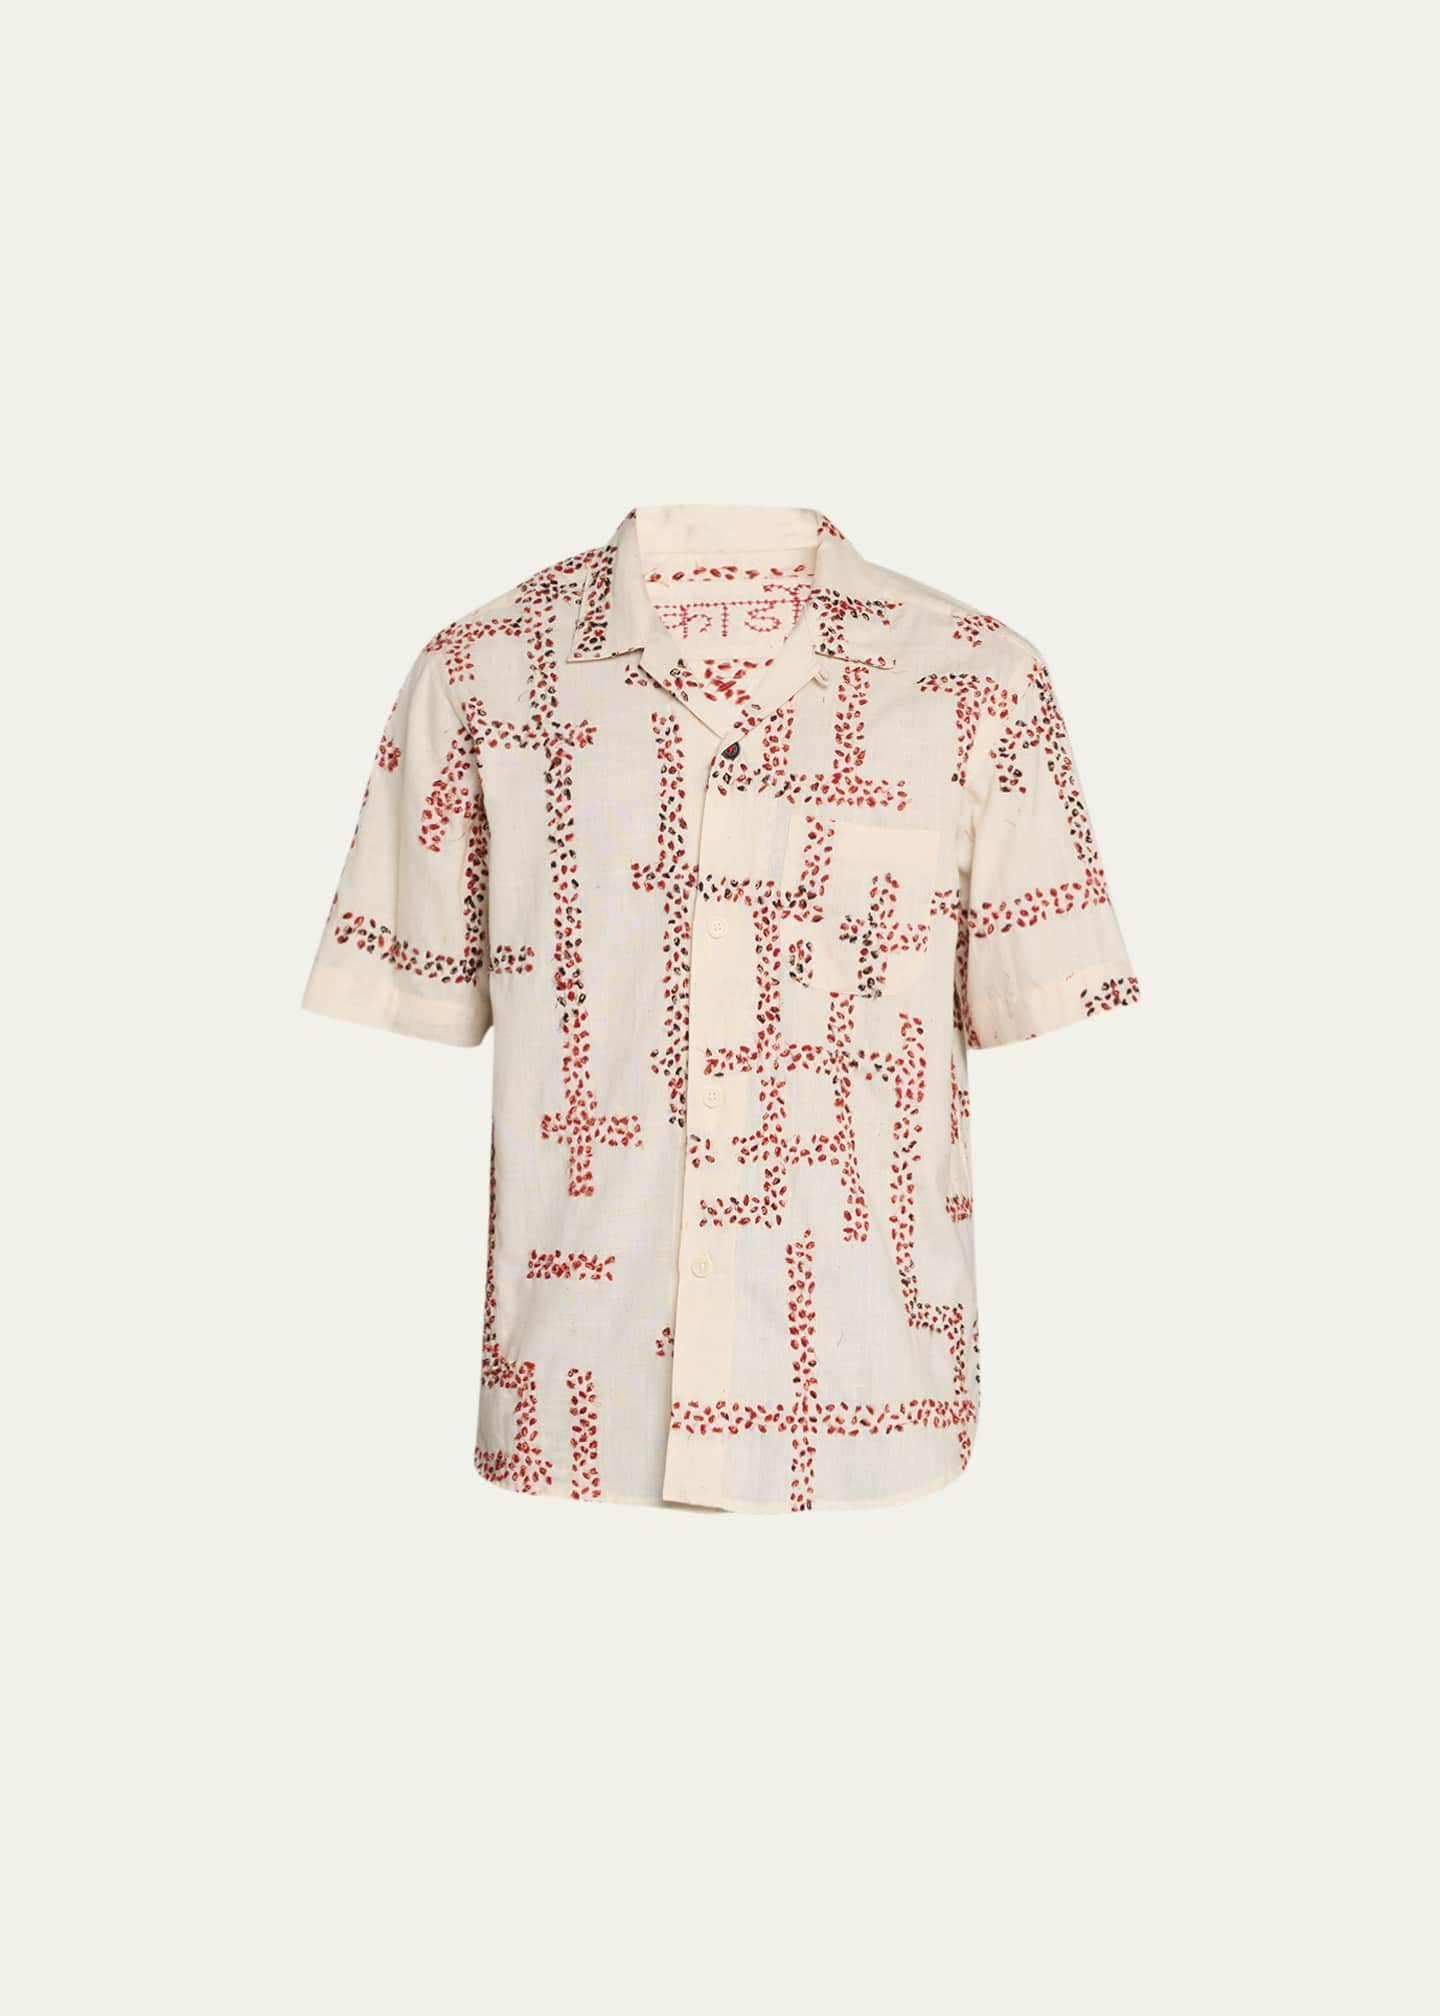 KARDO Men's Embroidered Camp Shirt - Bergdorf Goodman